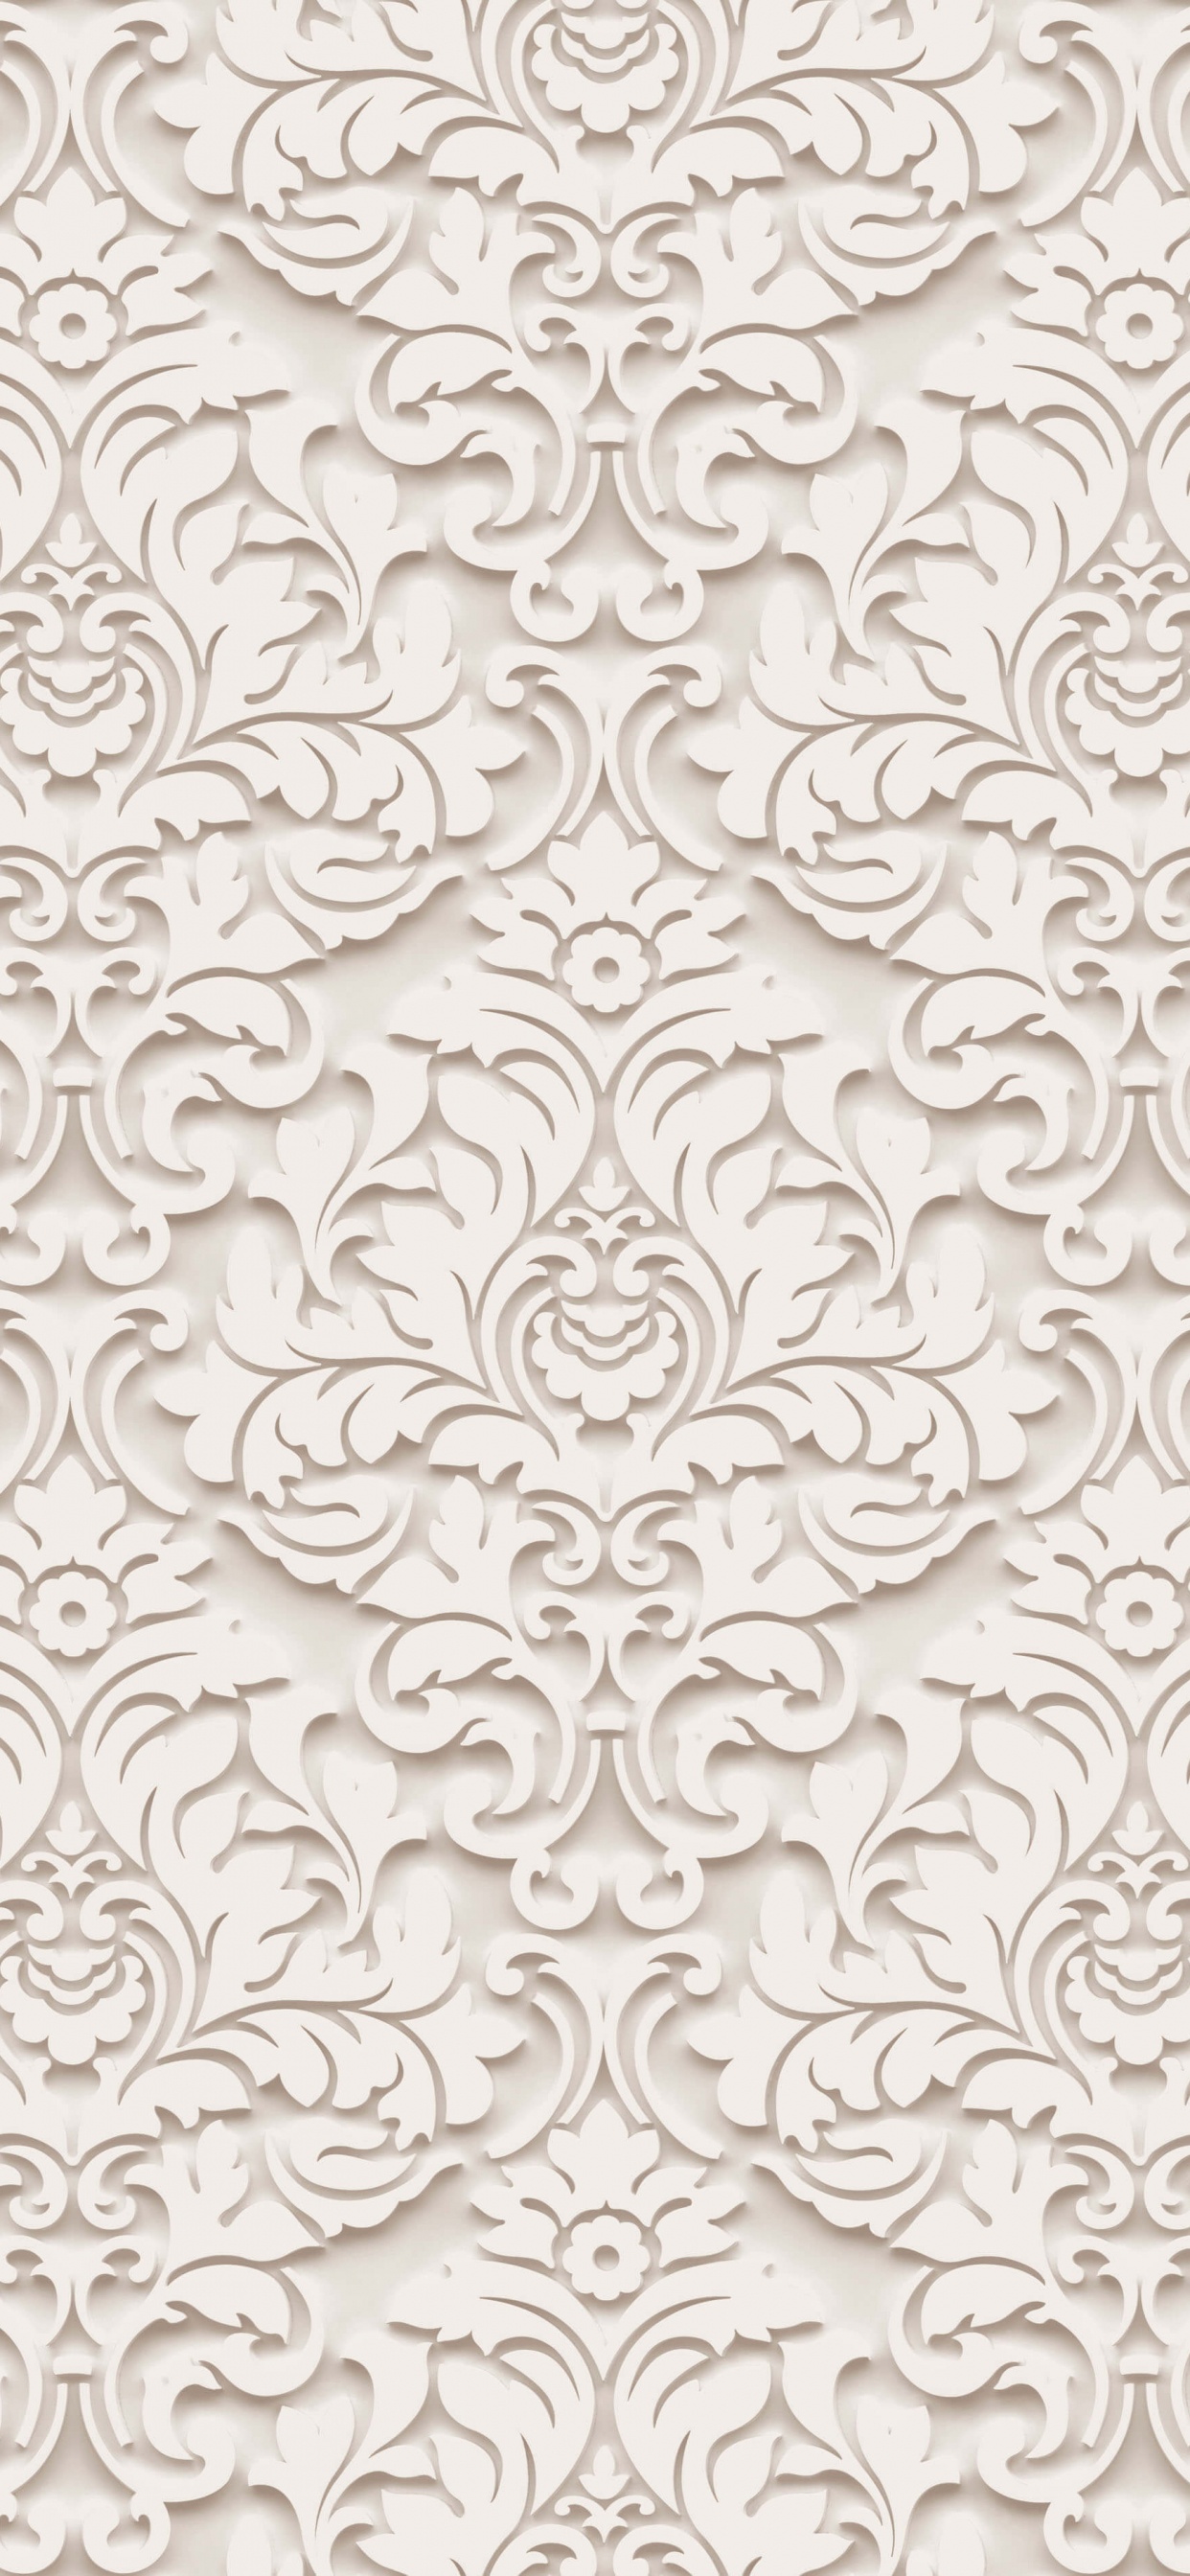 Textil Floral Blanco y Negro. Wallpaper in 1242x2688 Resolution